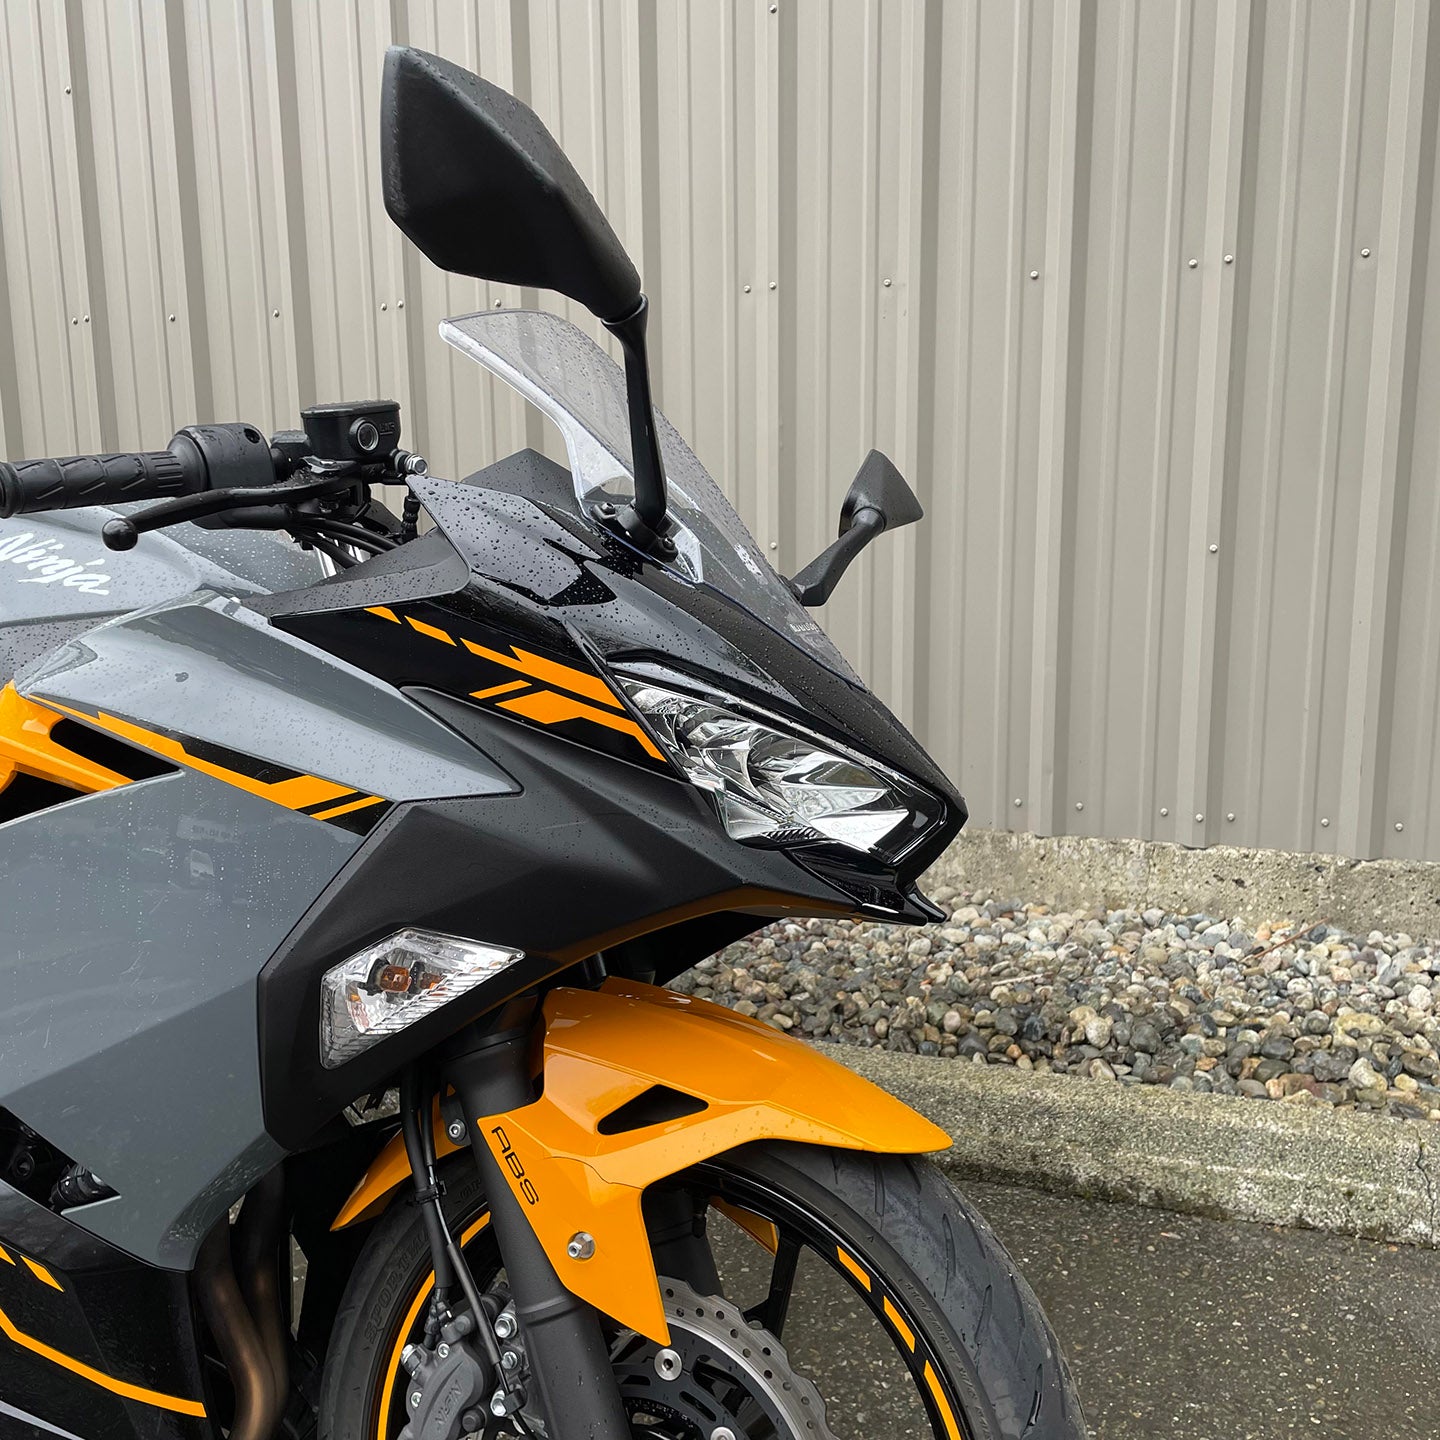 2018 Kawasaki Ninja 400 ABS (5,257 Miles)